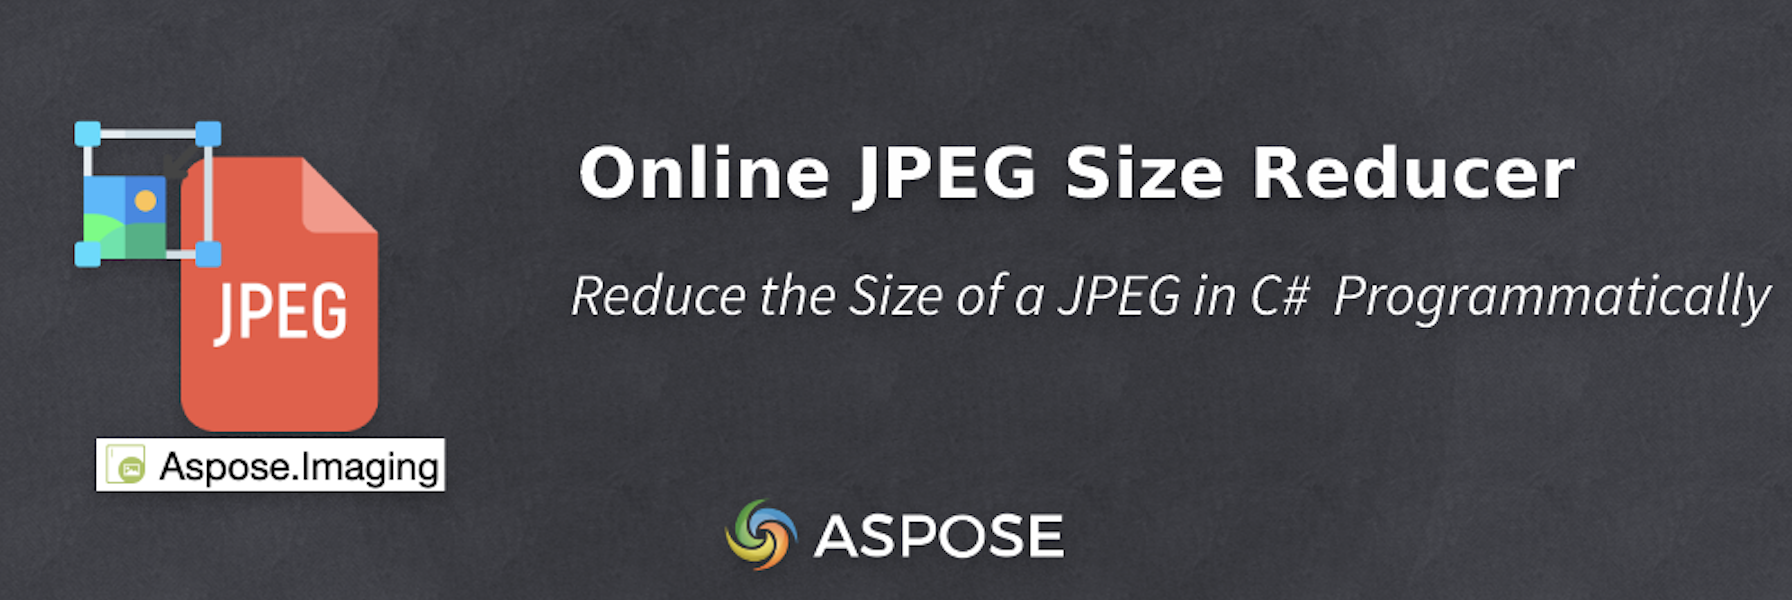 تقليل حجم ملف JPEG في C# - أداة تقليل حجم JPEG عبر الإنترنت